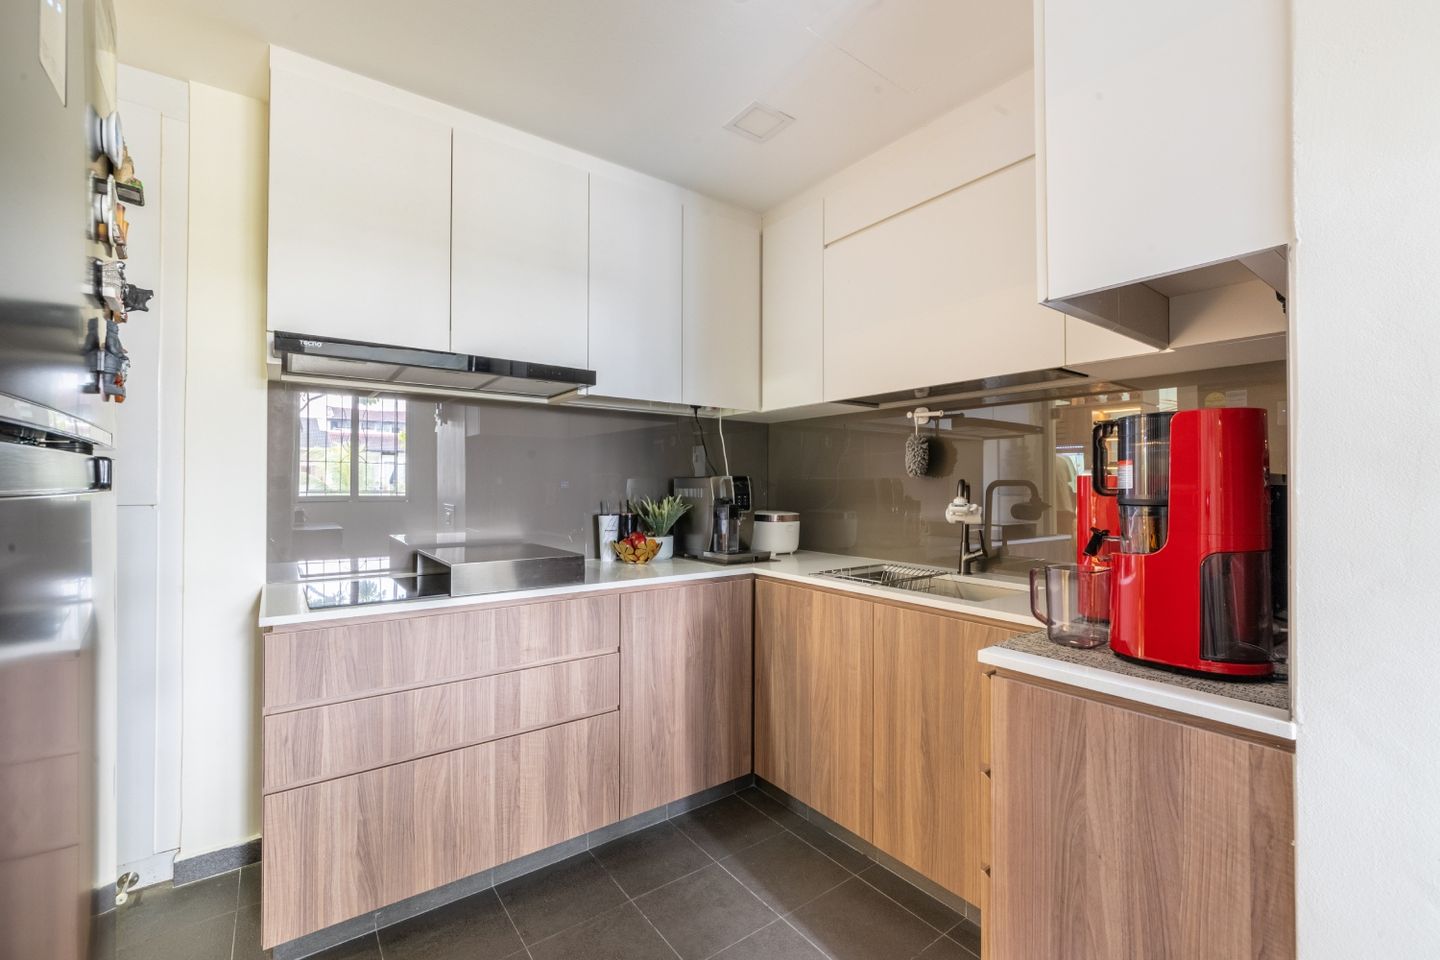 U-Shaped Kitchen Design With Glossy Dado Tiles - Livspace